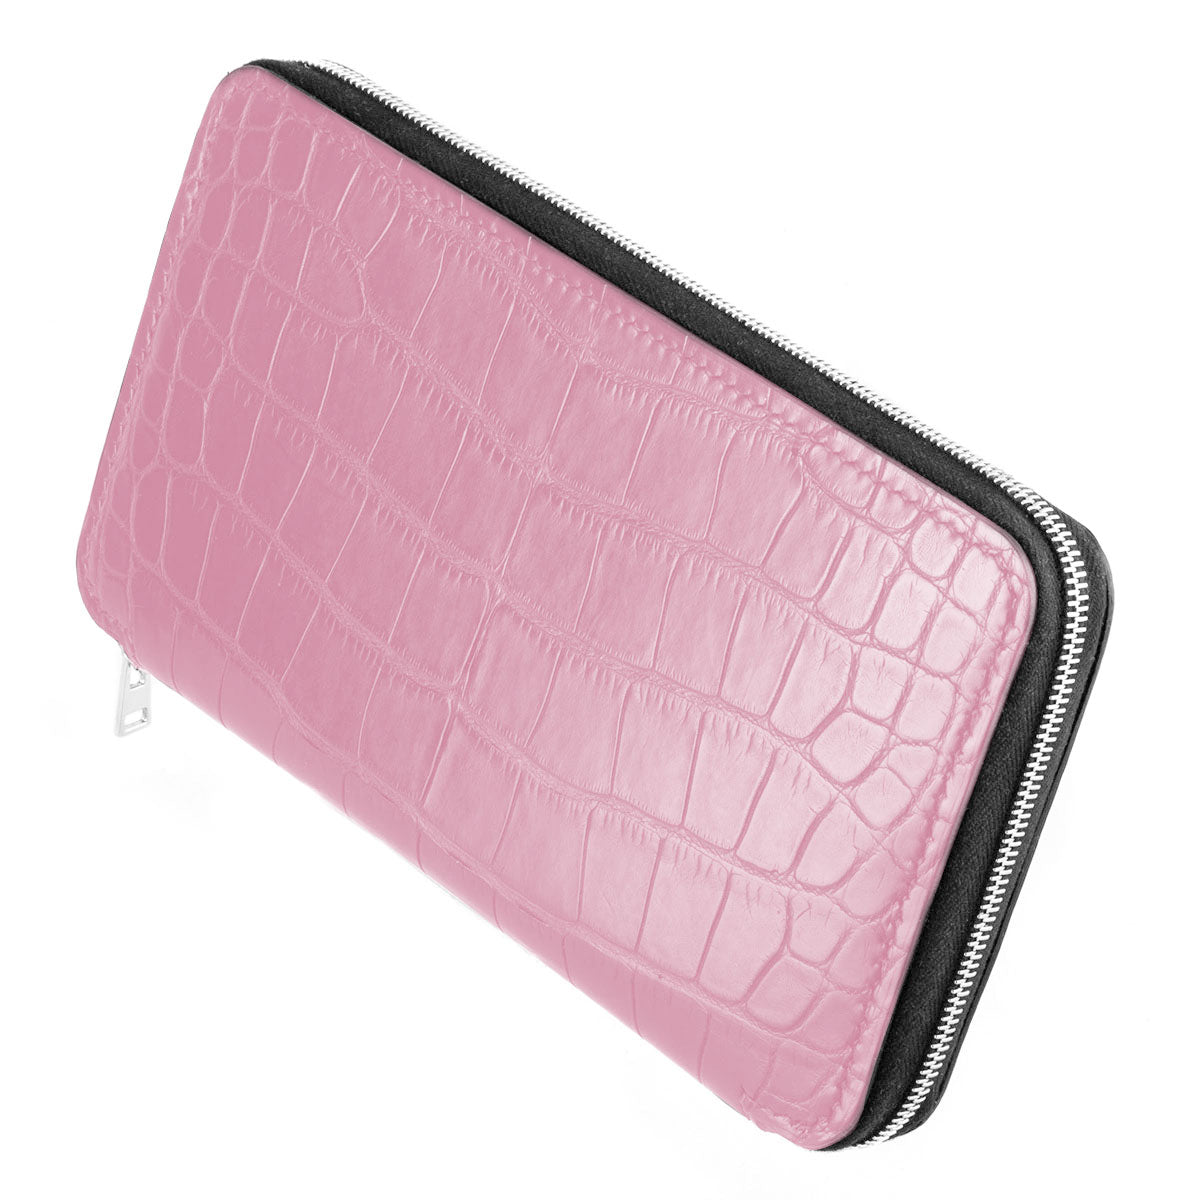 « Platinum » Zipped wallet - Alligator / crocodile